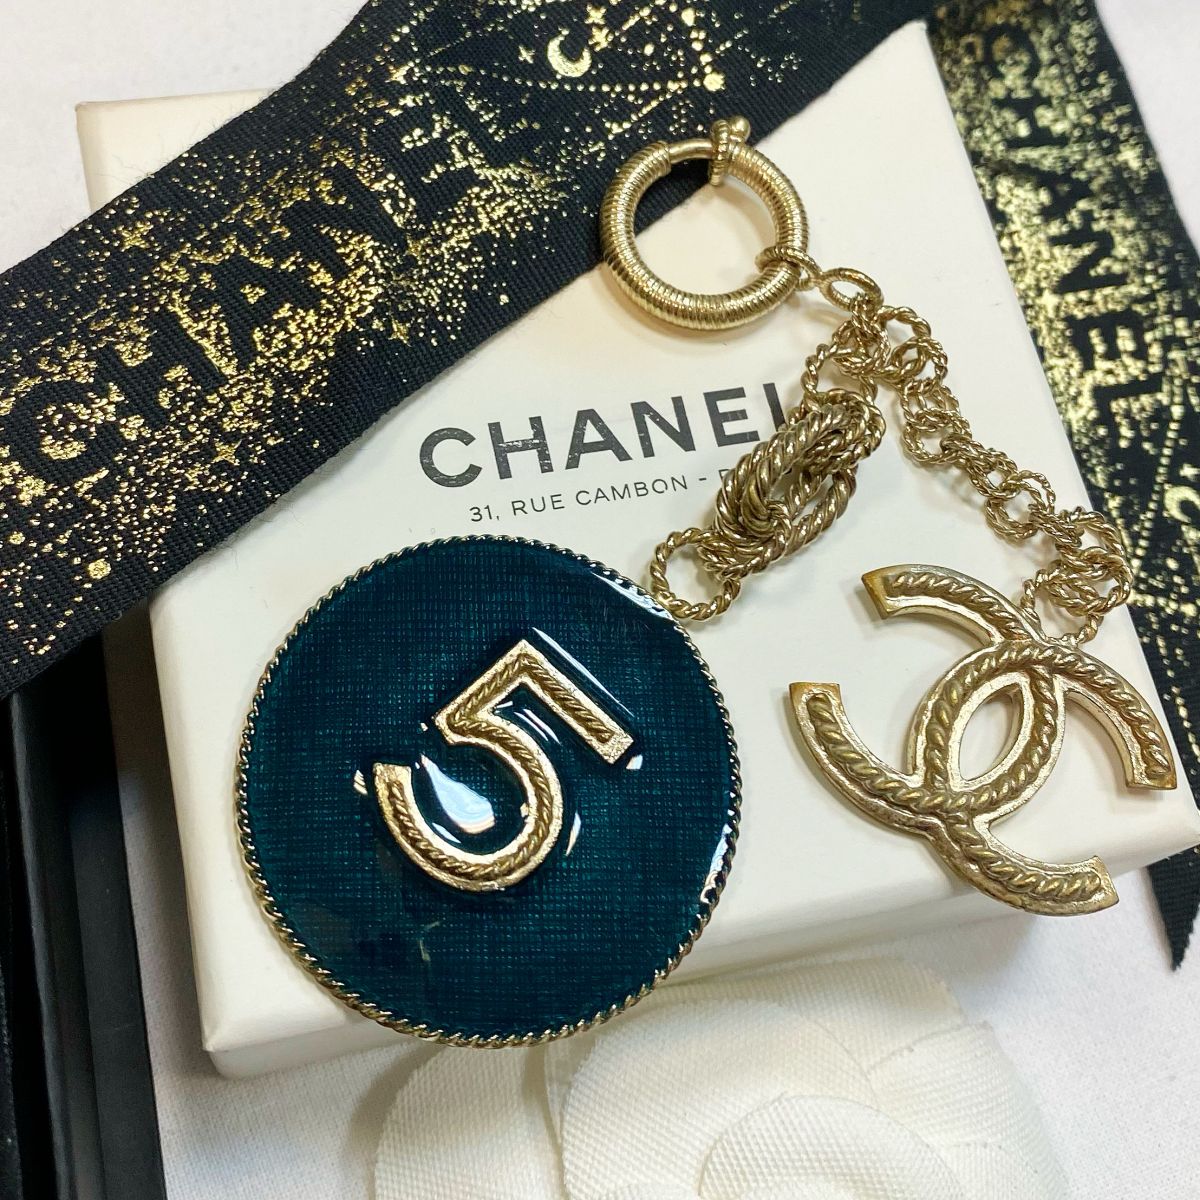 Брелок Chanel цена 23 078 руб / упаковка / 